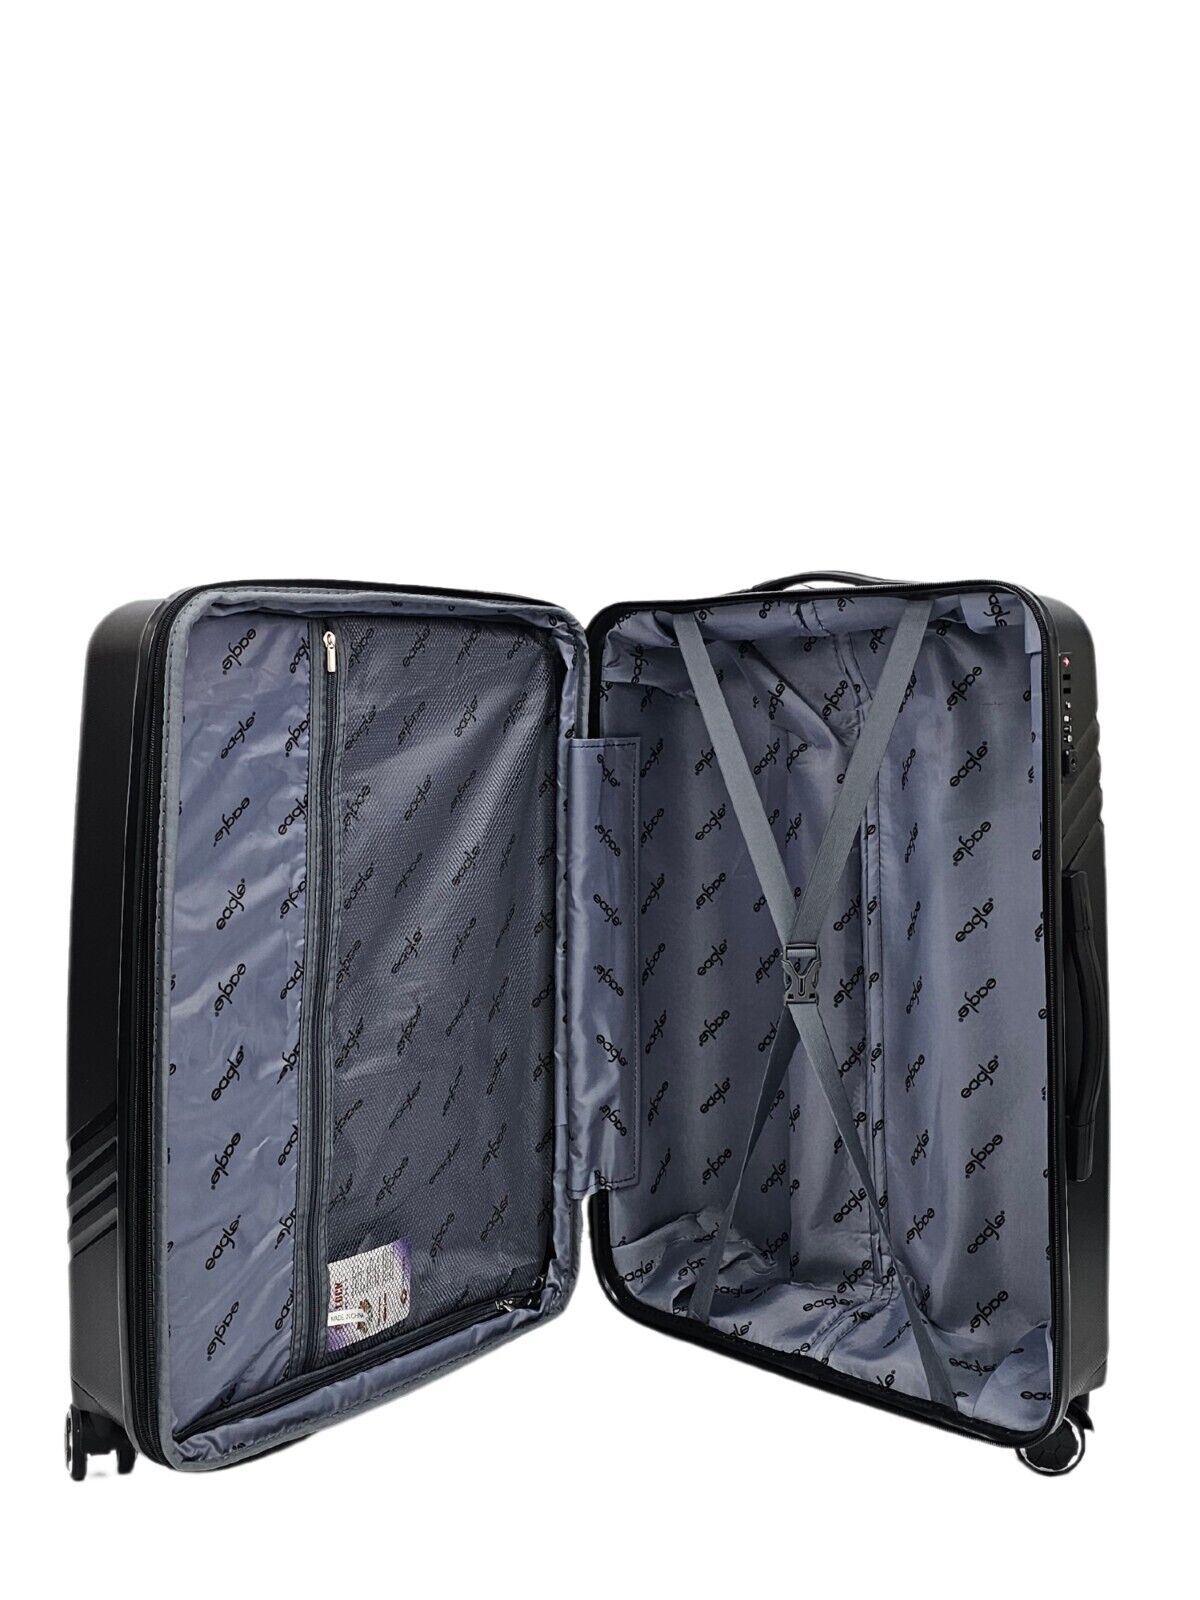 Brookwood Medium Hard Shell Suitcase in Black